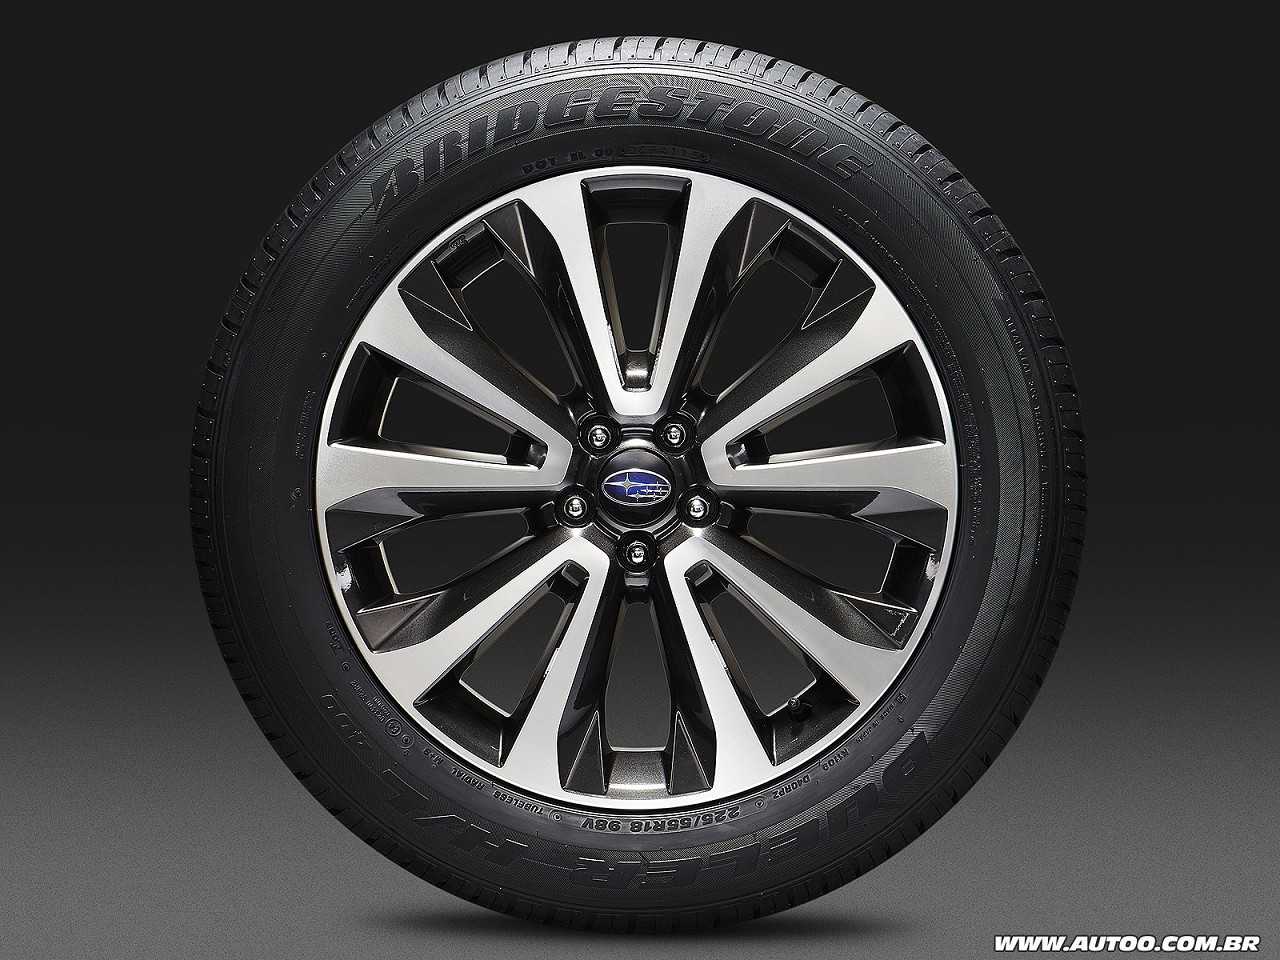 SubaruForester 2017 - rodas